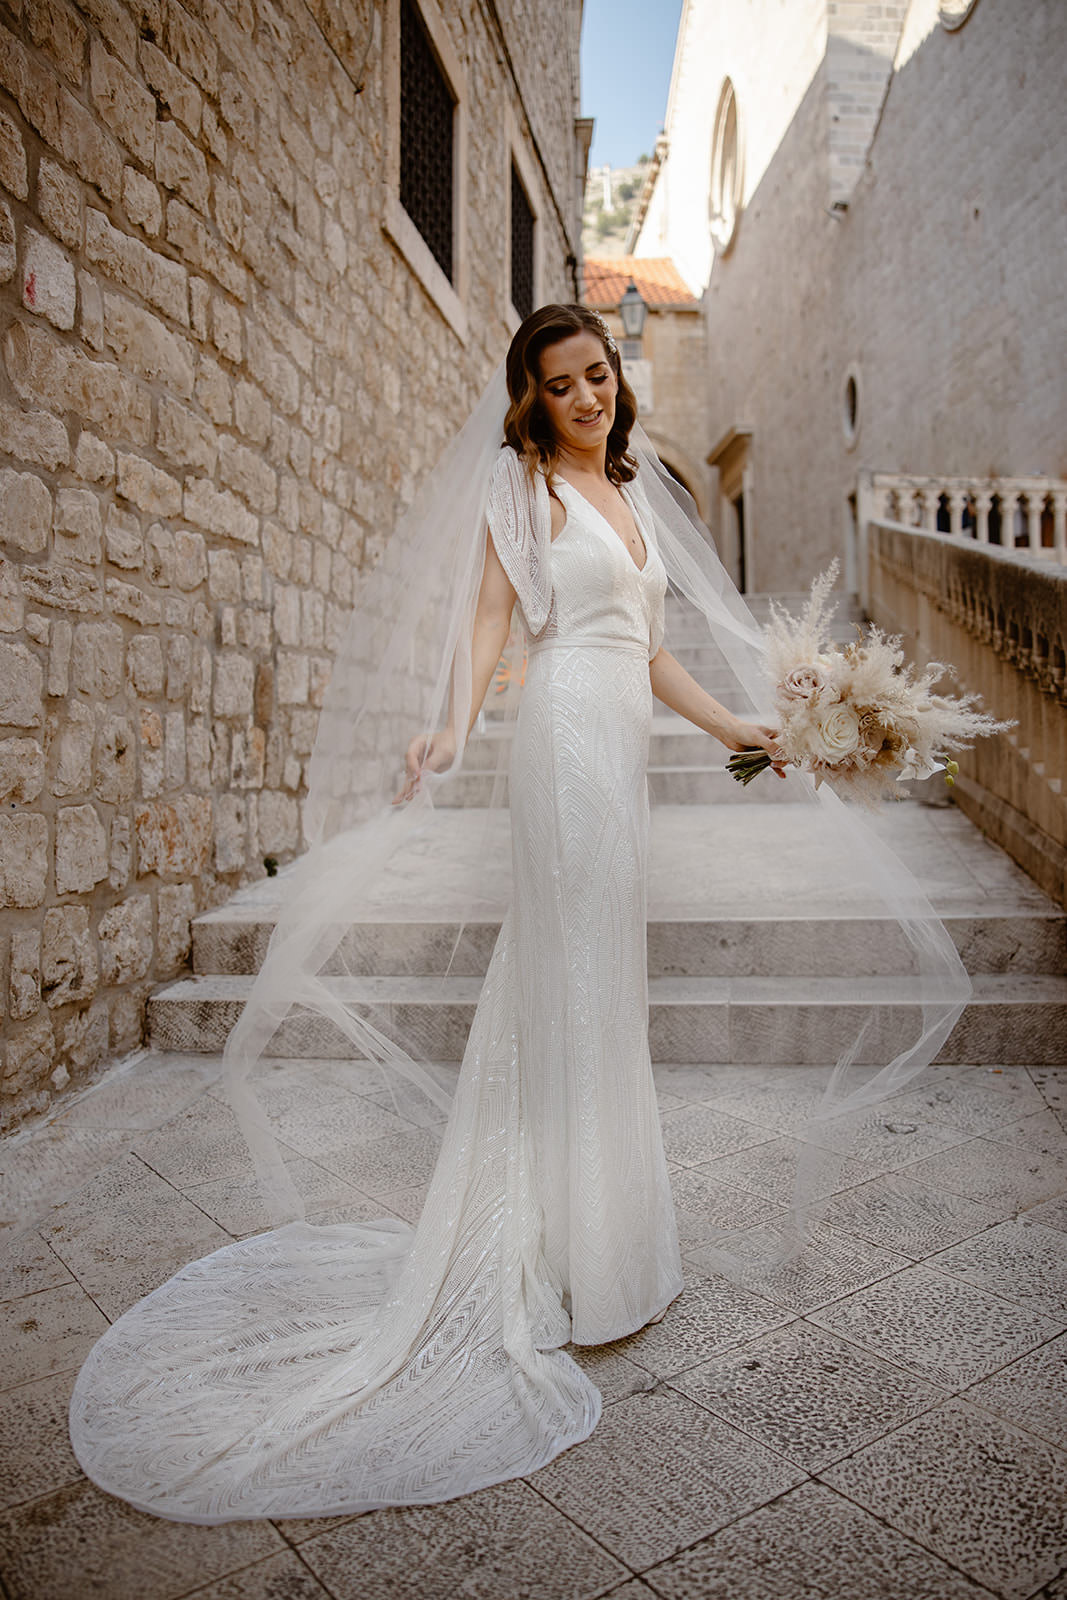 Sponza Palace Wedding Villa Rose Nicola Darren 9 | Croatia Elopement Photographer and Videographer